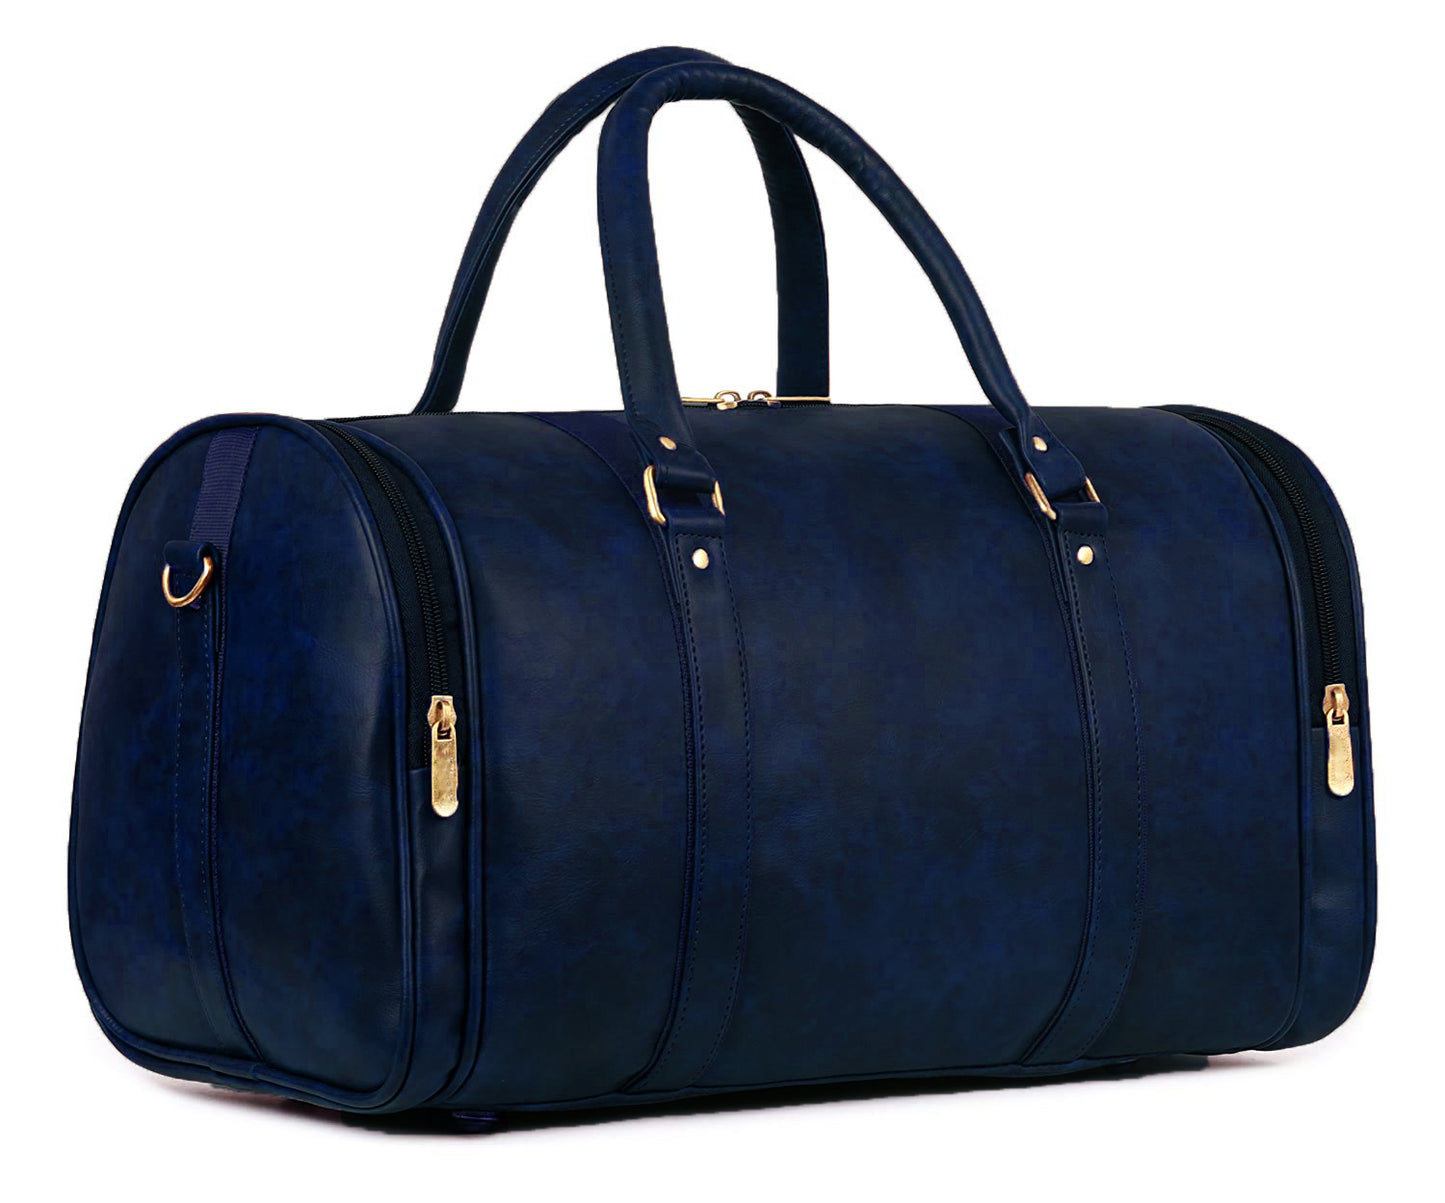 Navy Blue Antique Vegan Leather Duffel Bag